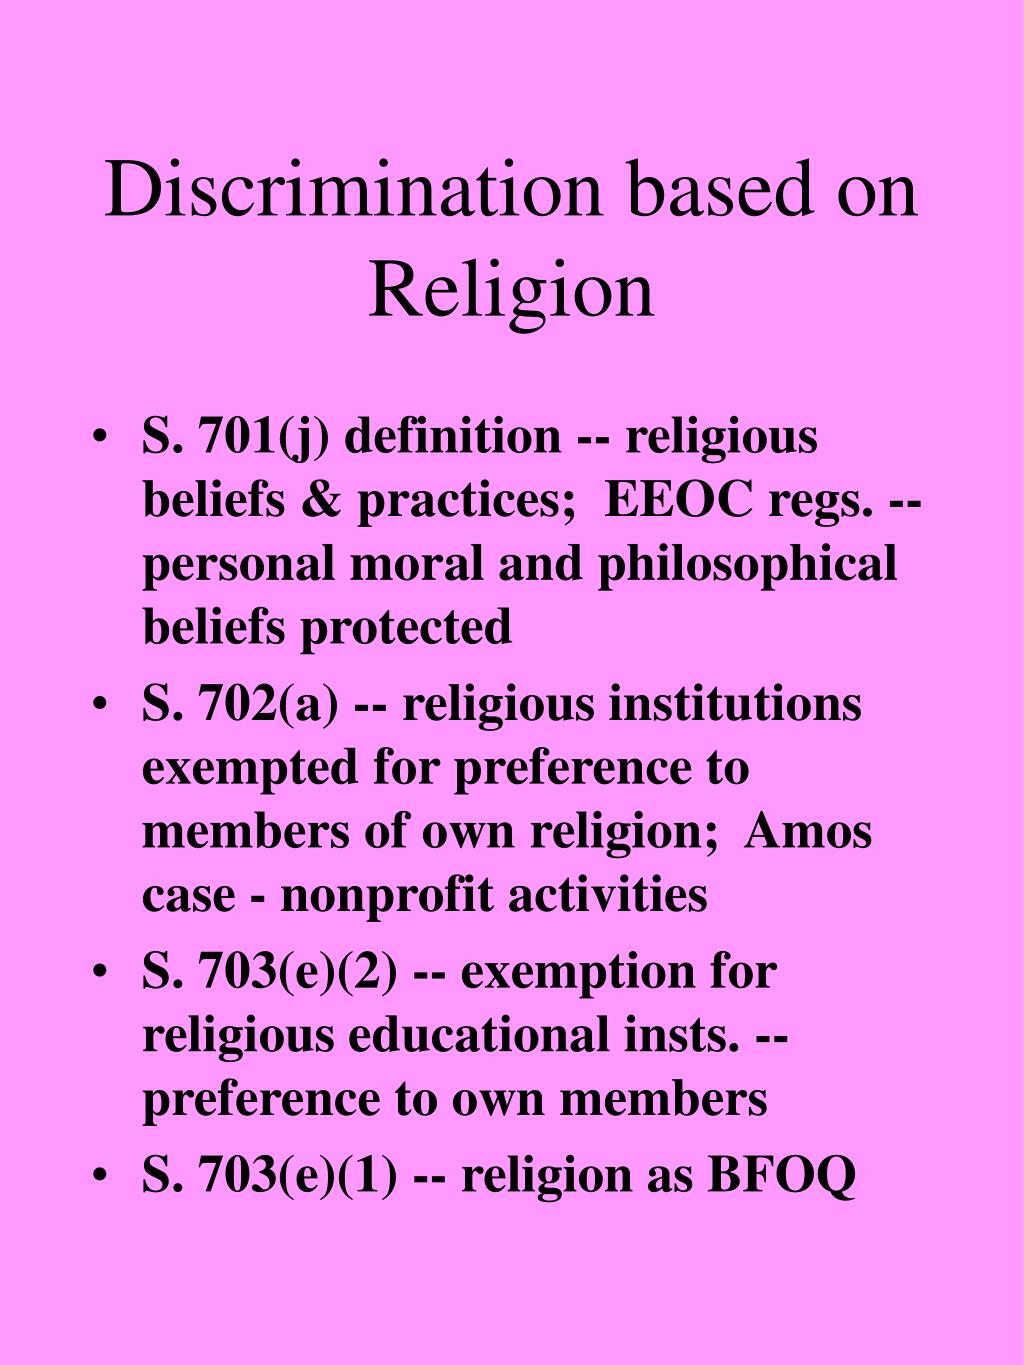 religious discrimination essay conclusion